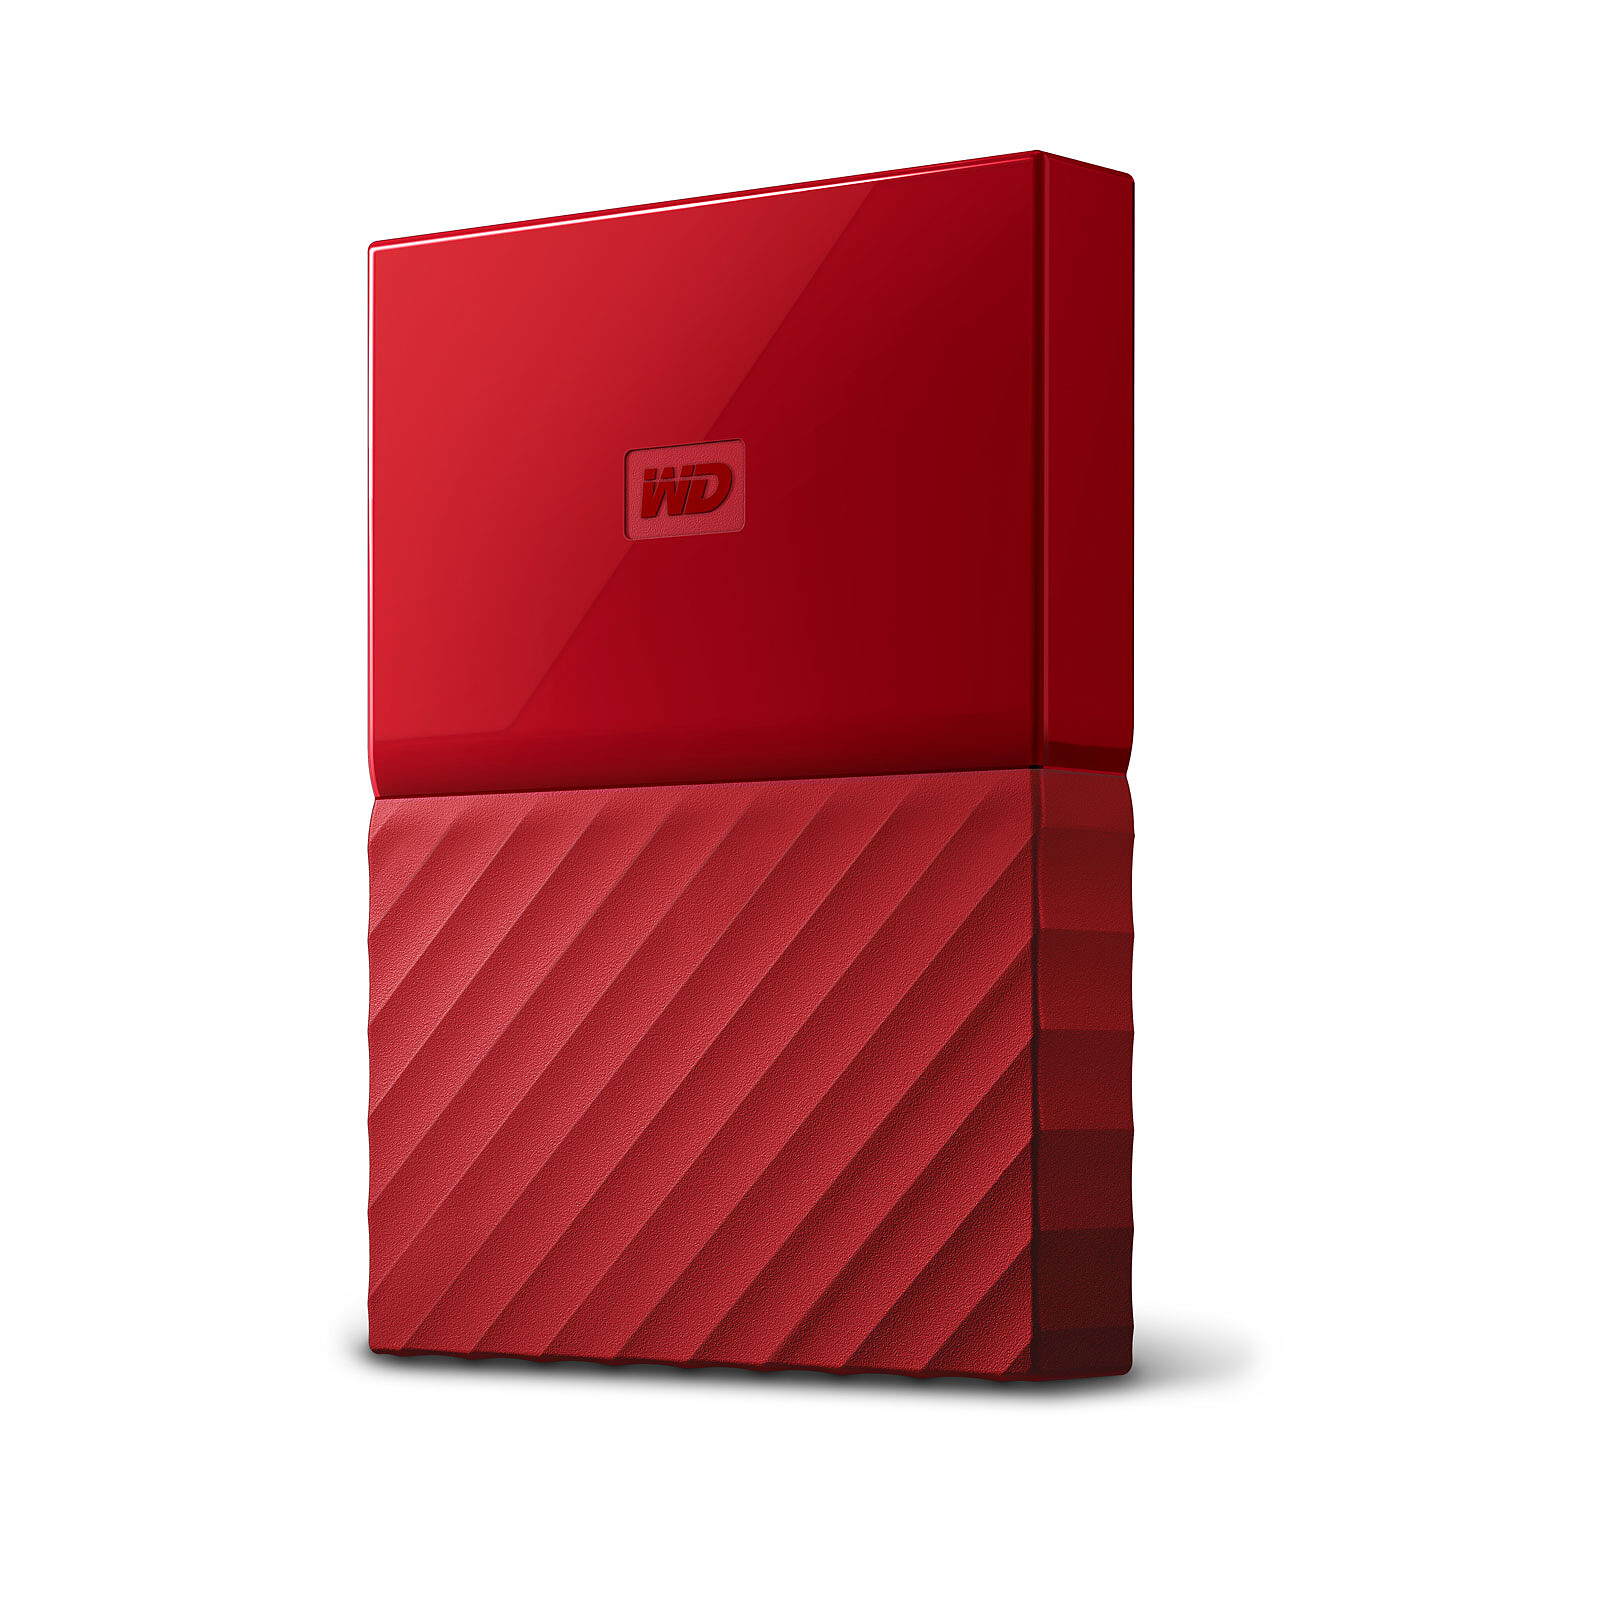 Samsung Portable SSD T7 1Tb Rojo - Disco duro externo - LDLC